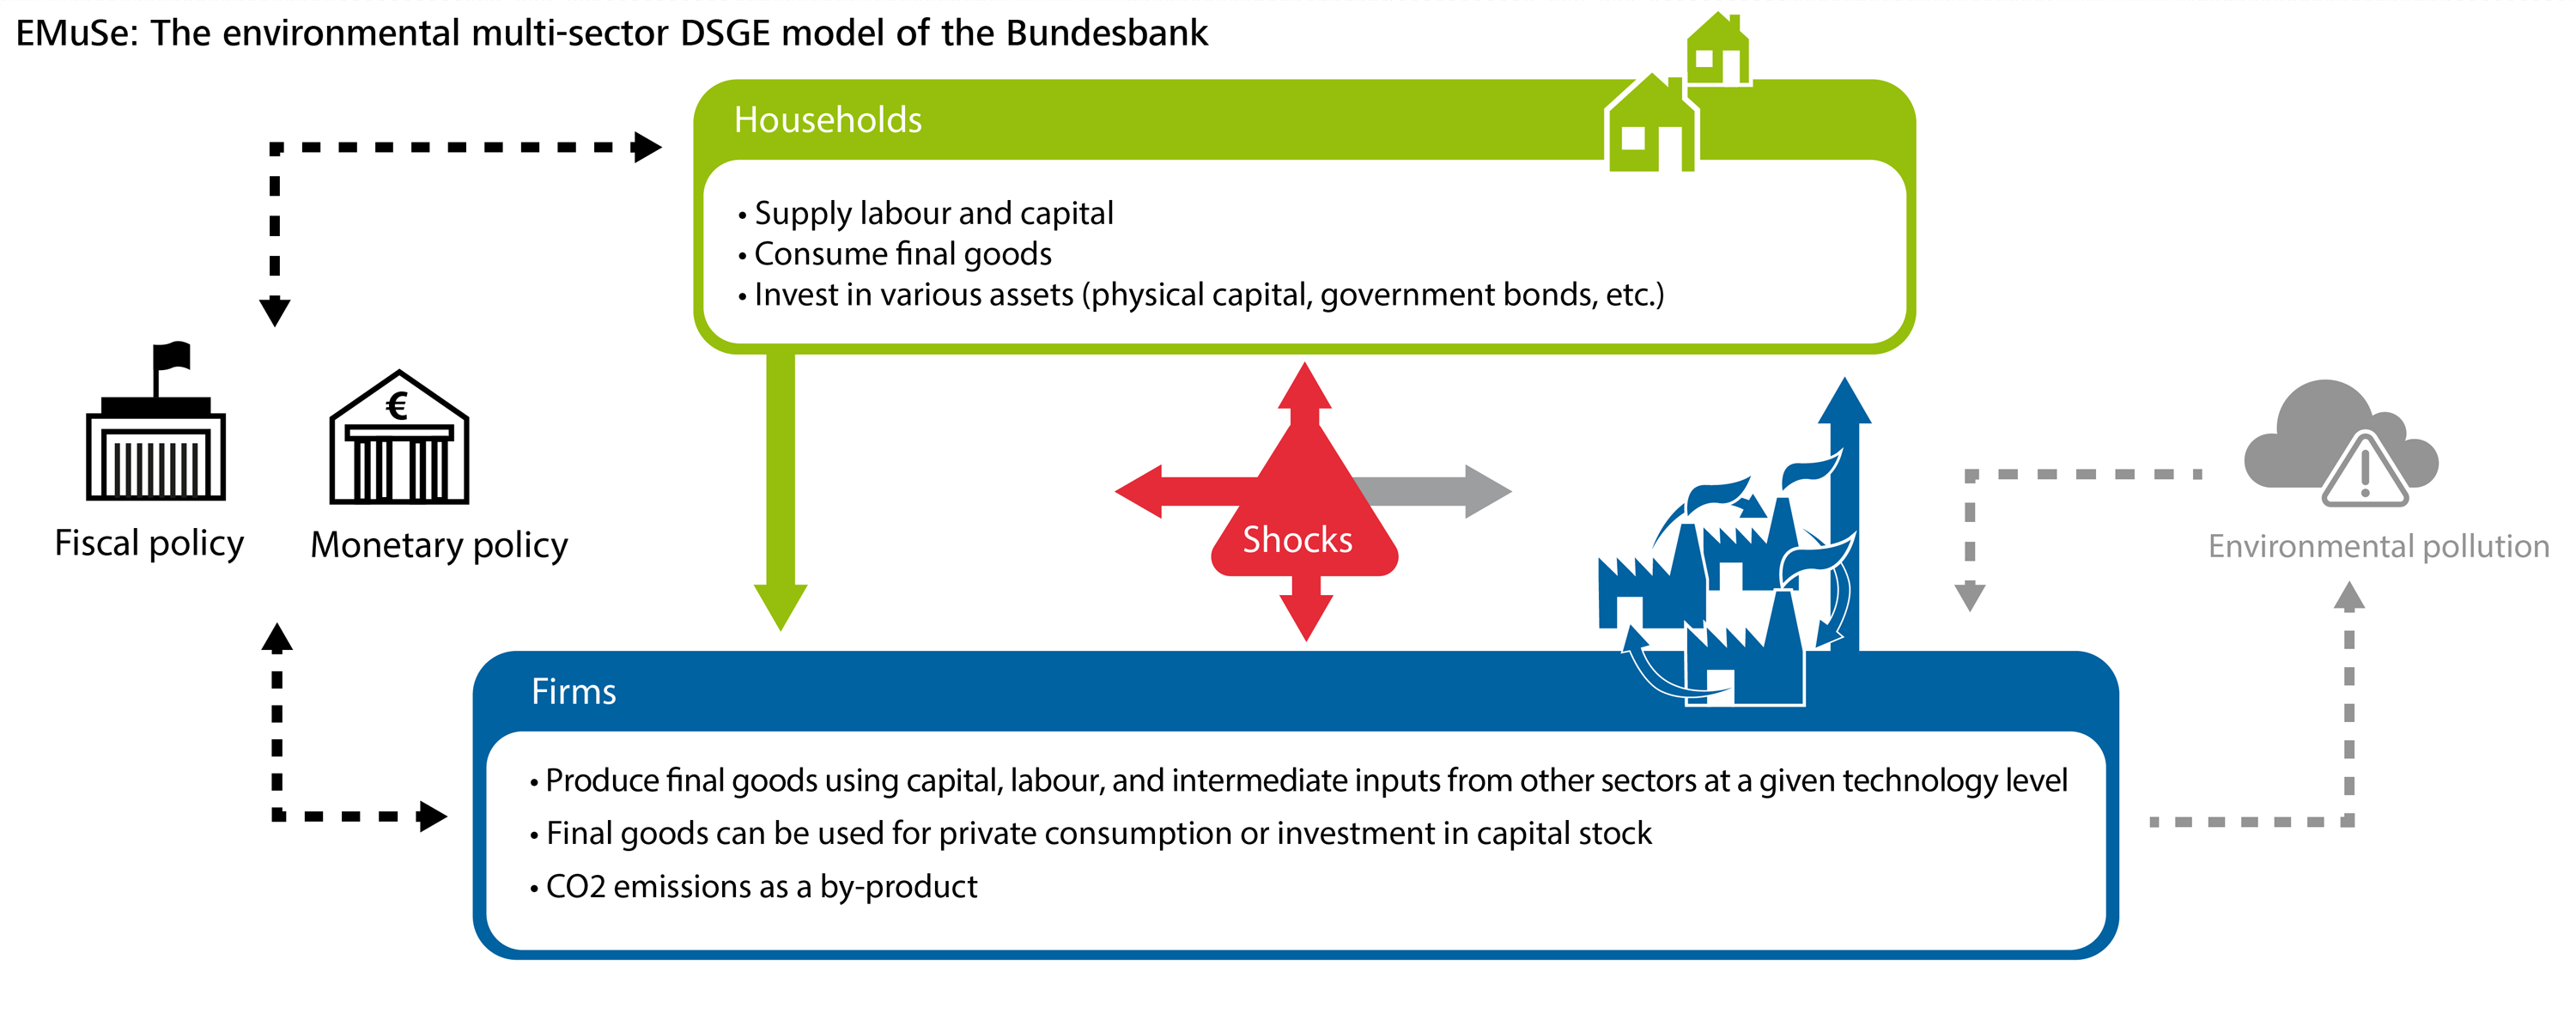 EMuSe: The environmental multi-sector DSGE model of the Bundesbank ©Deutsche Bundesbank